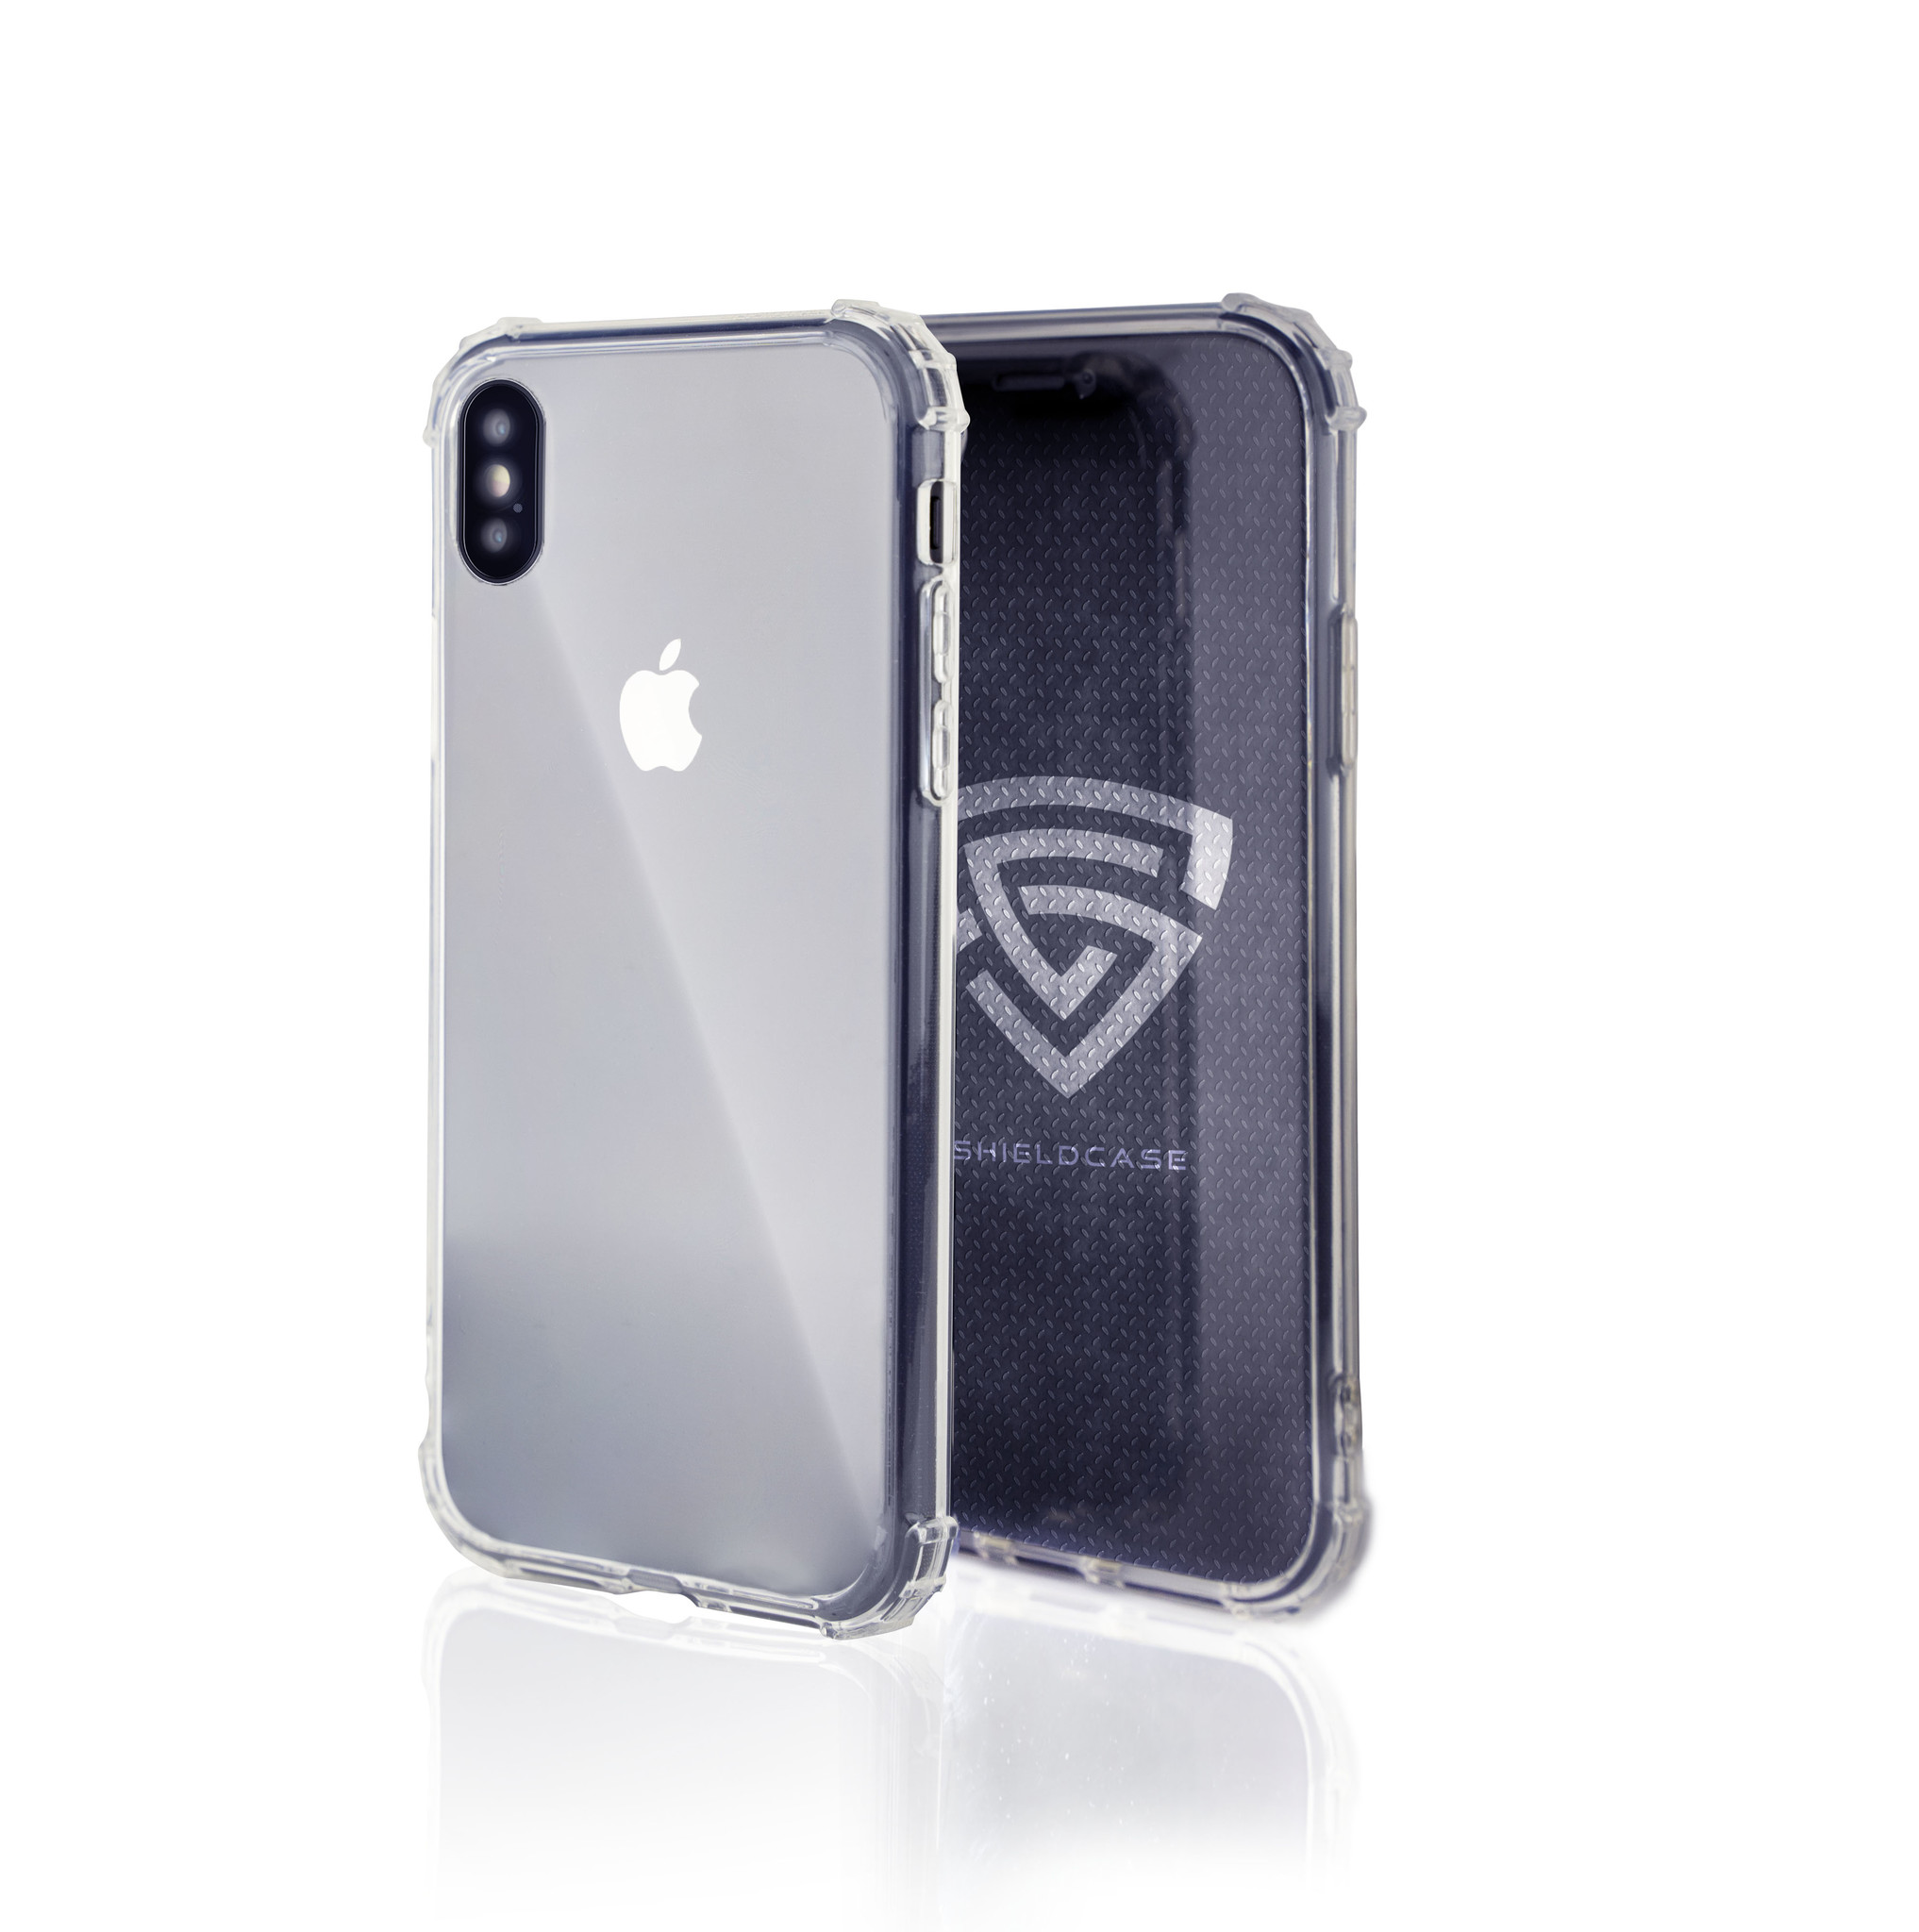 Omgeving Haringen veiligheid Perfect Bumper TPU hoesje iPhone Xs Max (transparant) - Phone-Factory